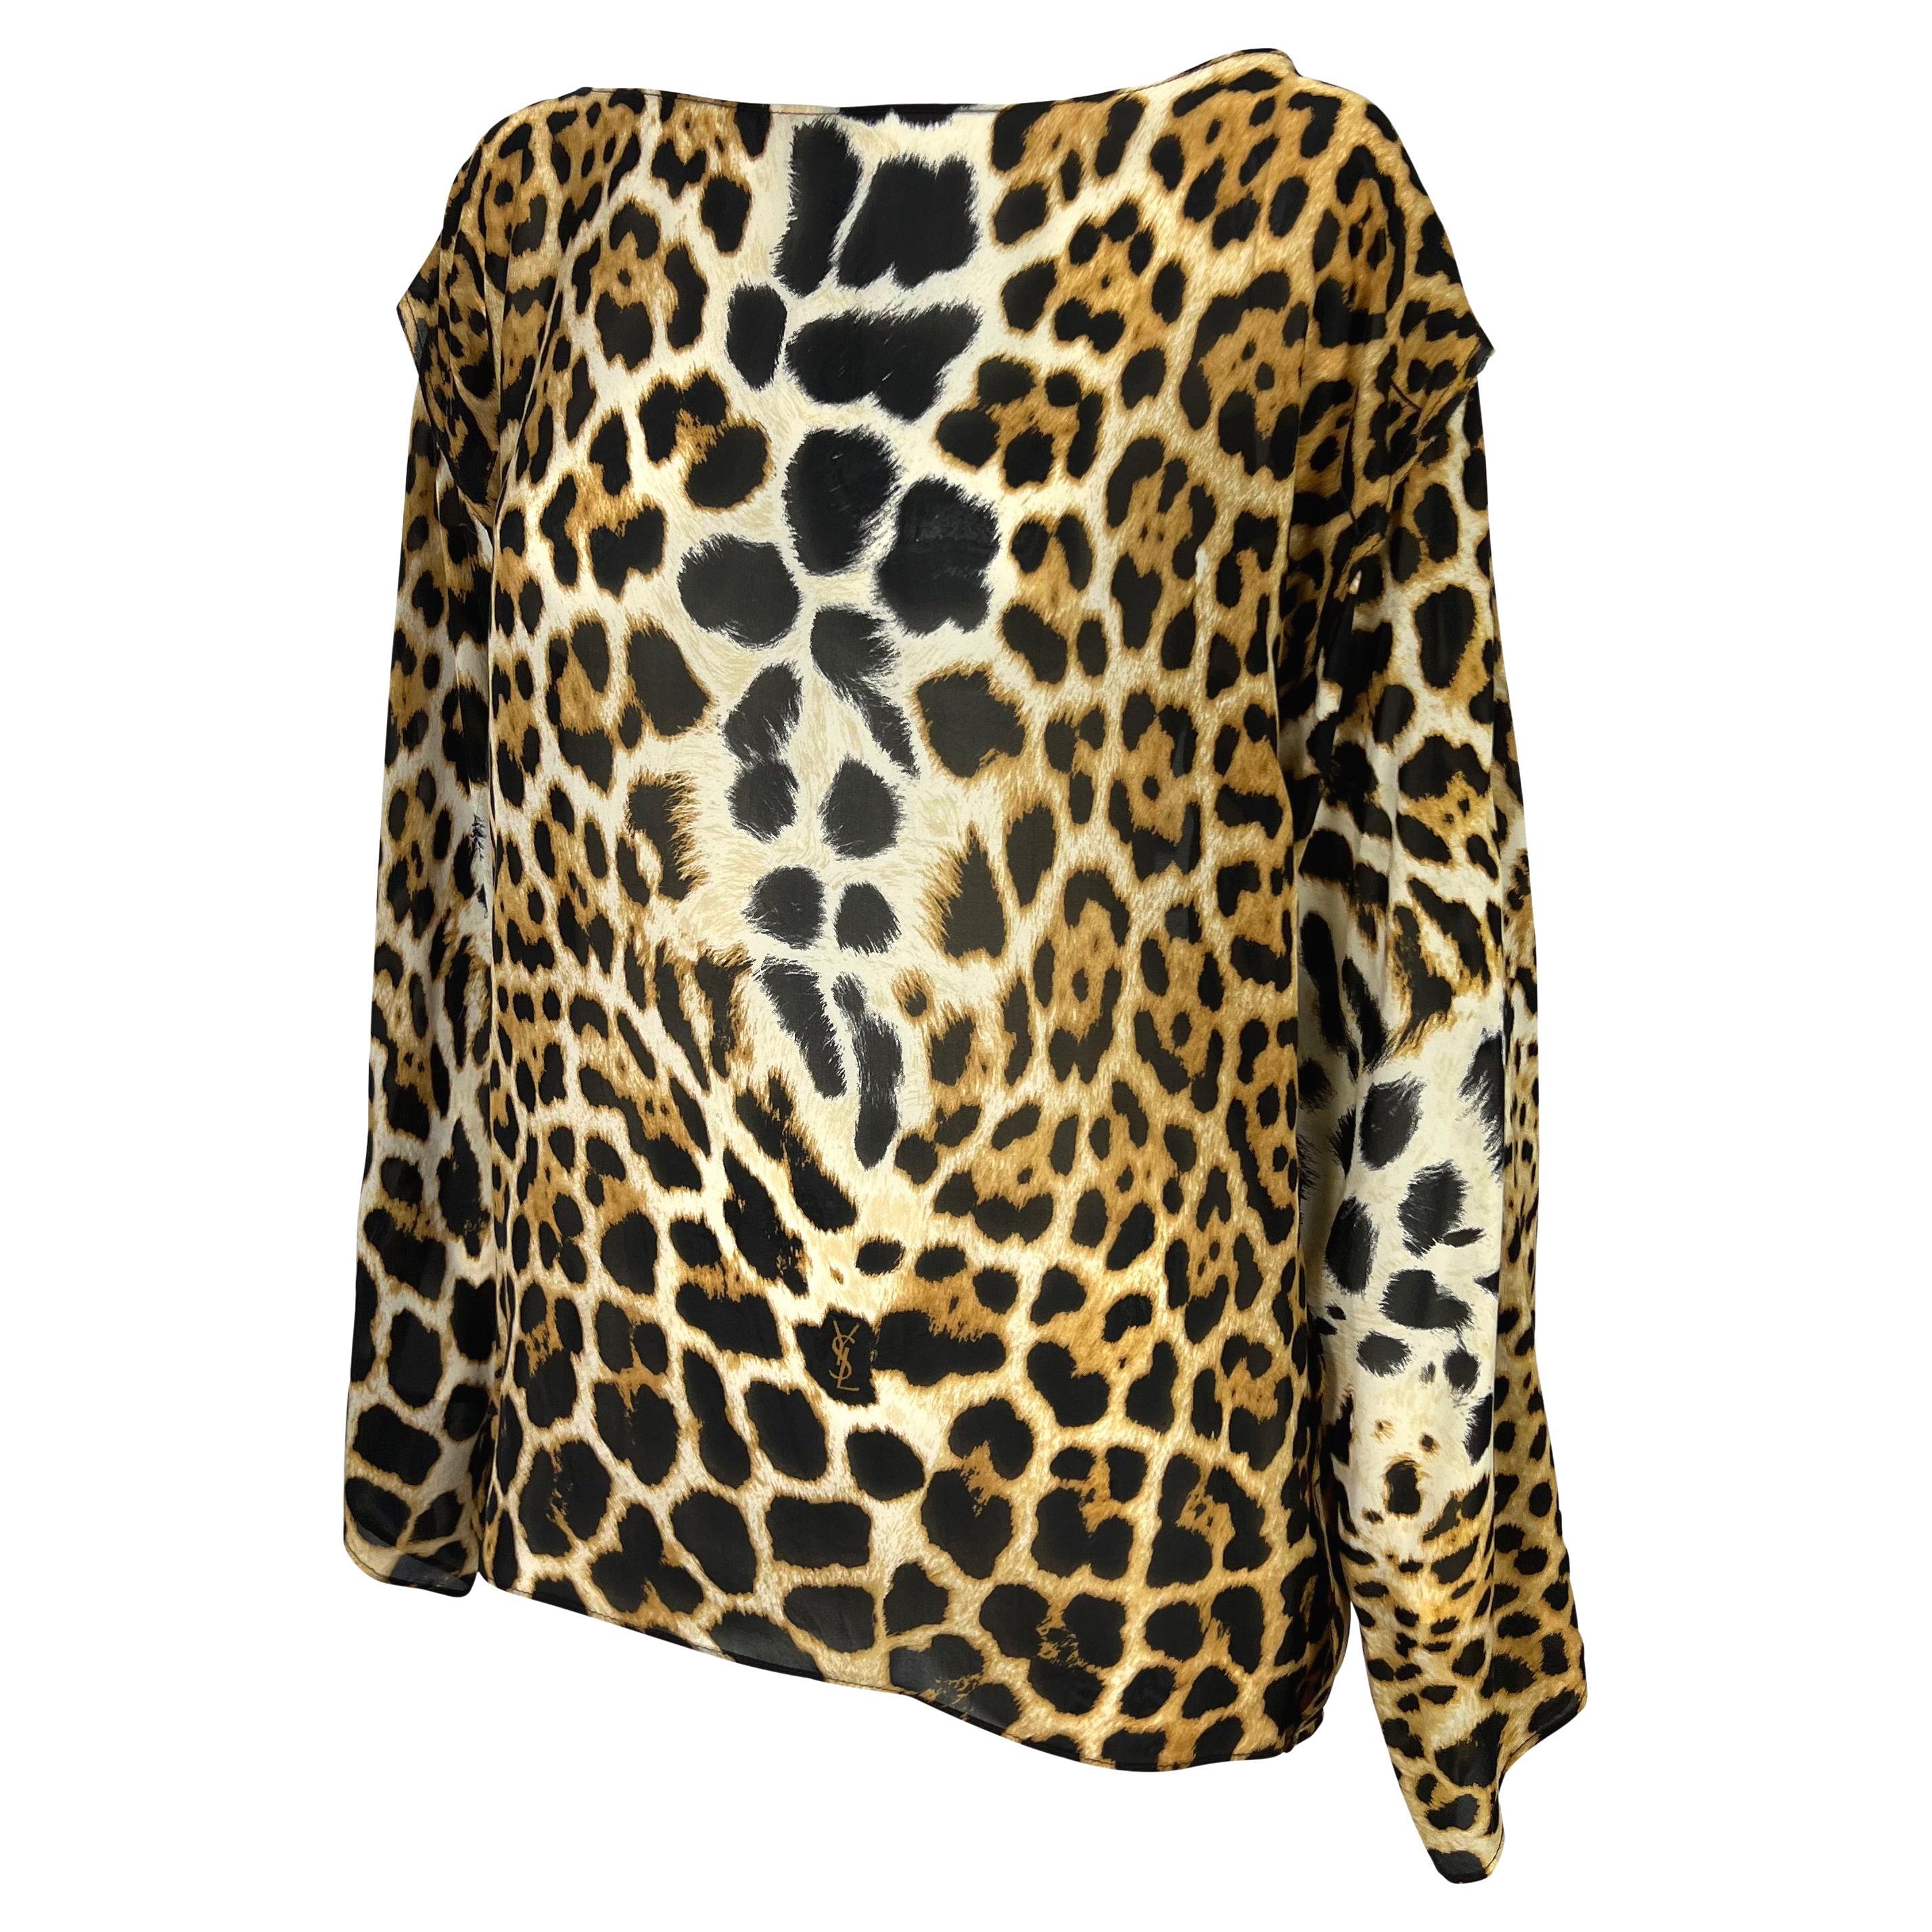 S/S 2002 Yves Saint Laurent by Tom Ford Safari Cheetah Print Sheer Silk Top For Sale 8